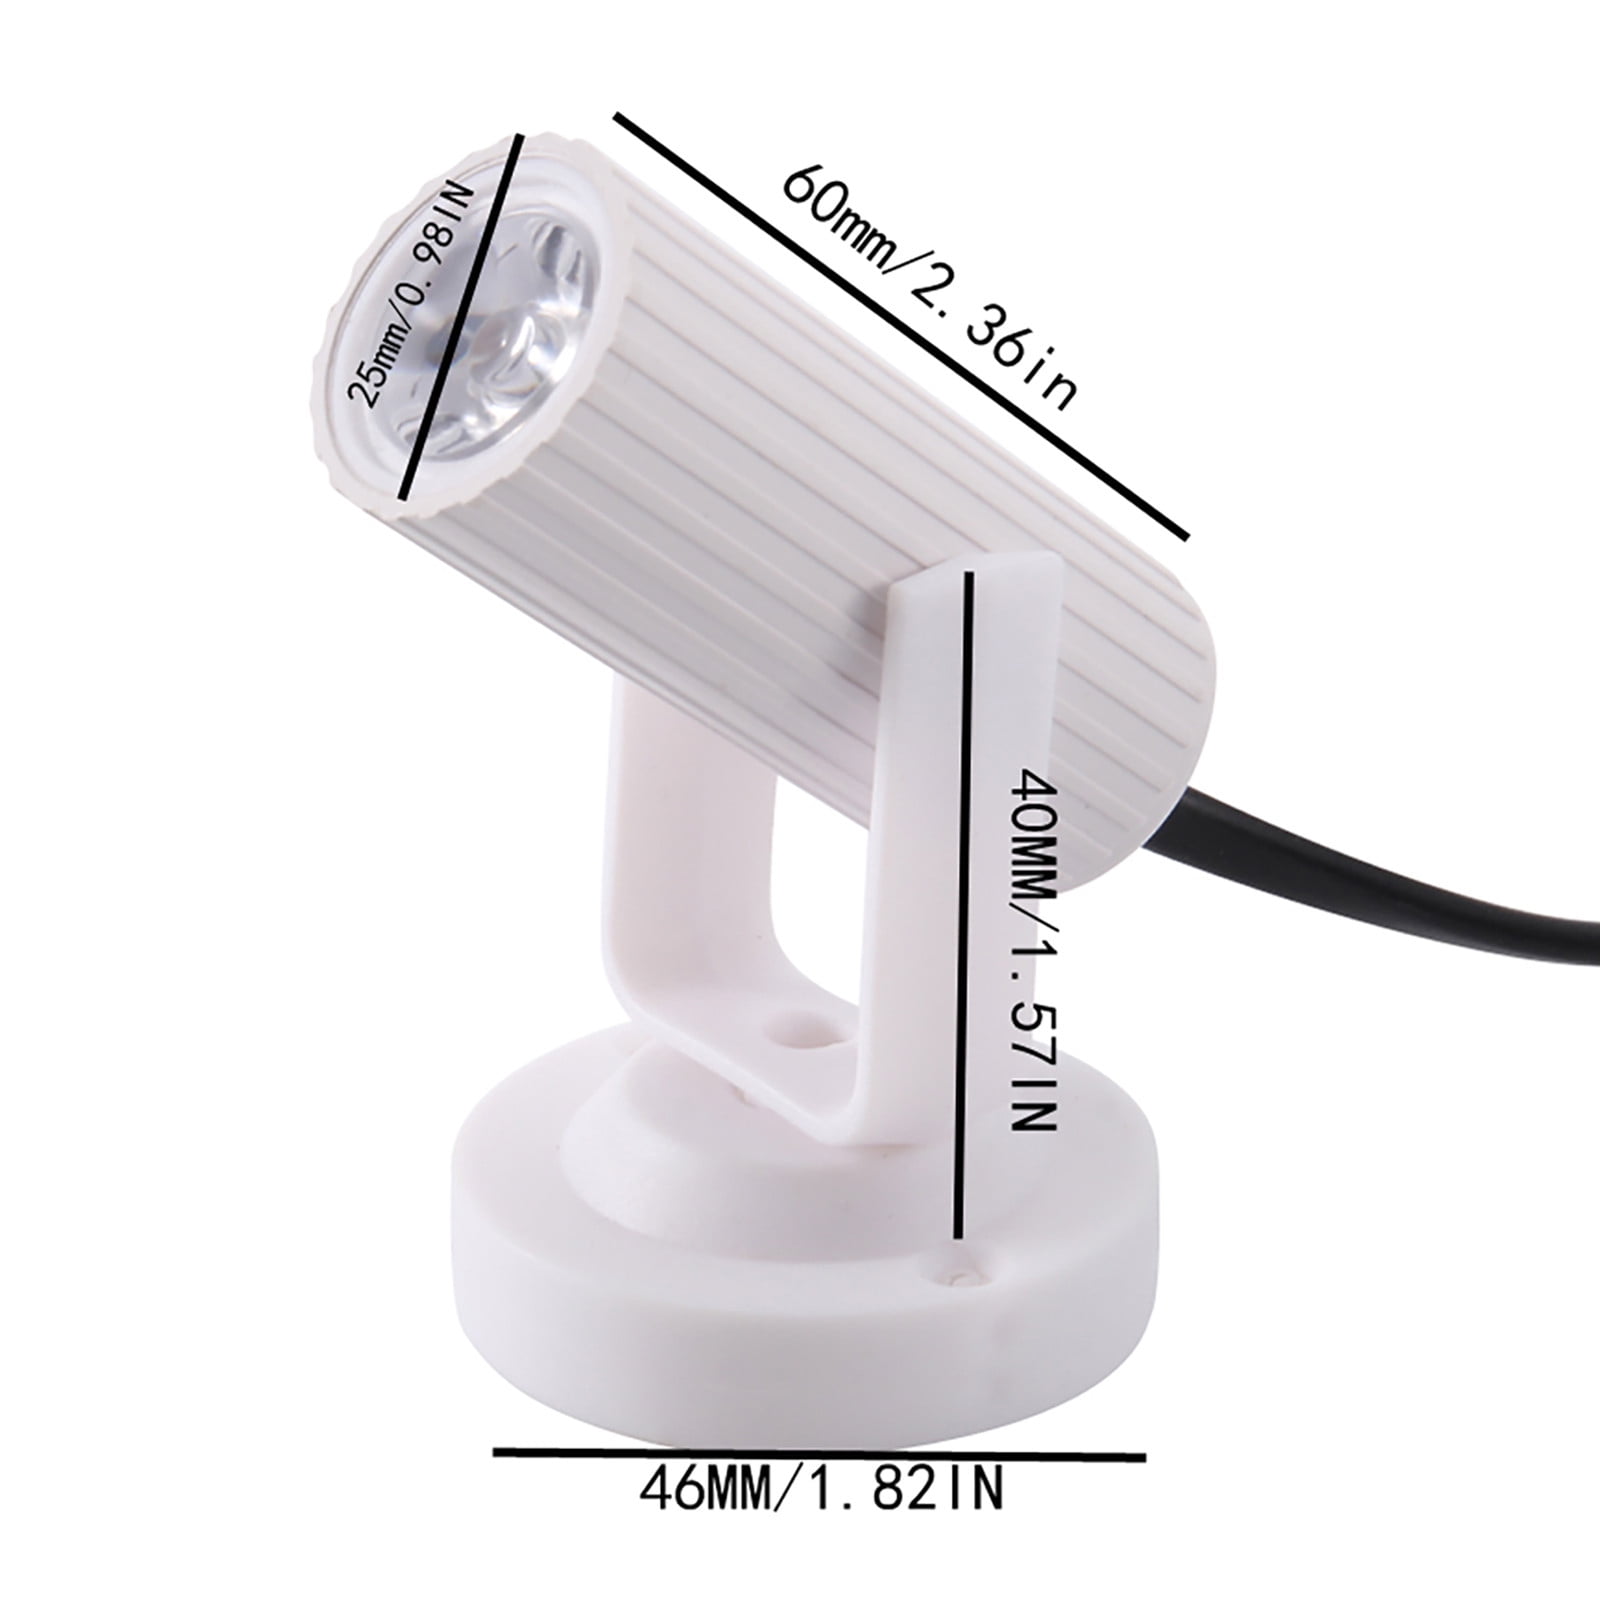 Monoprice Stage Right by Monoprice 200W DMX COB LED Ellipsoidal Stage Light White 3200K 26-degree Spotlight